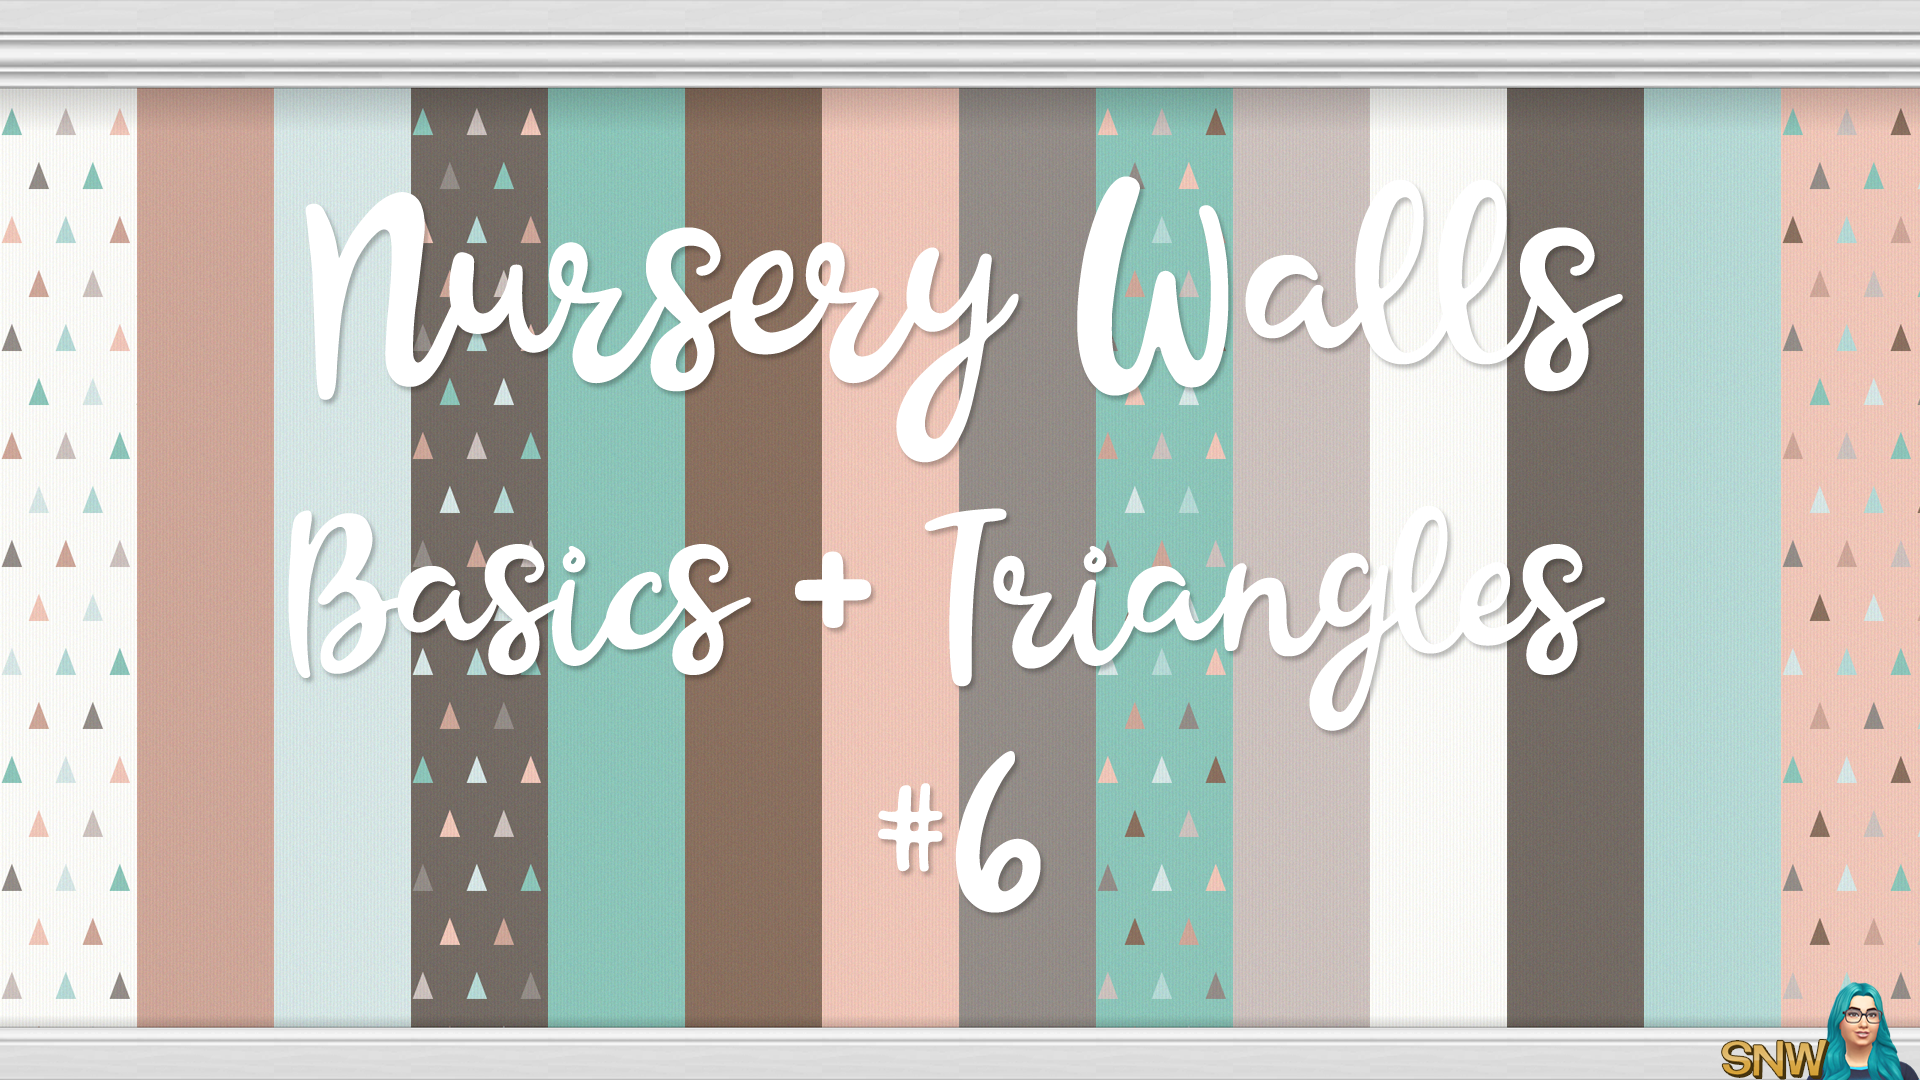 Nursery Walls Set #6 - Basics + Triangles